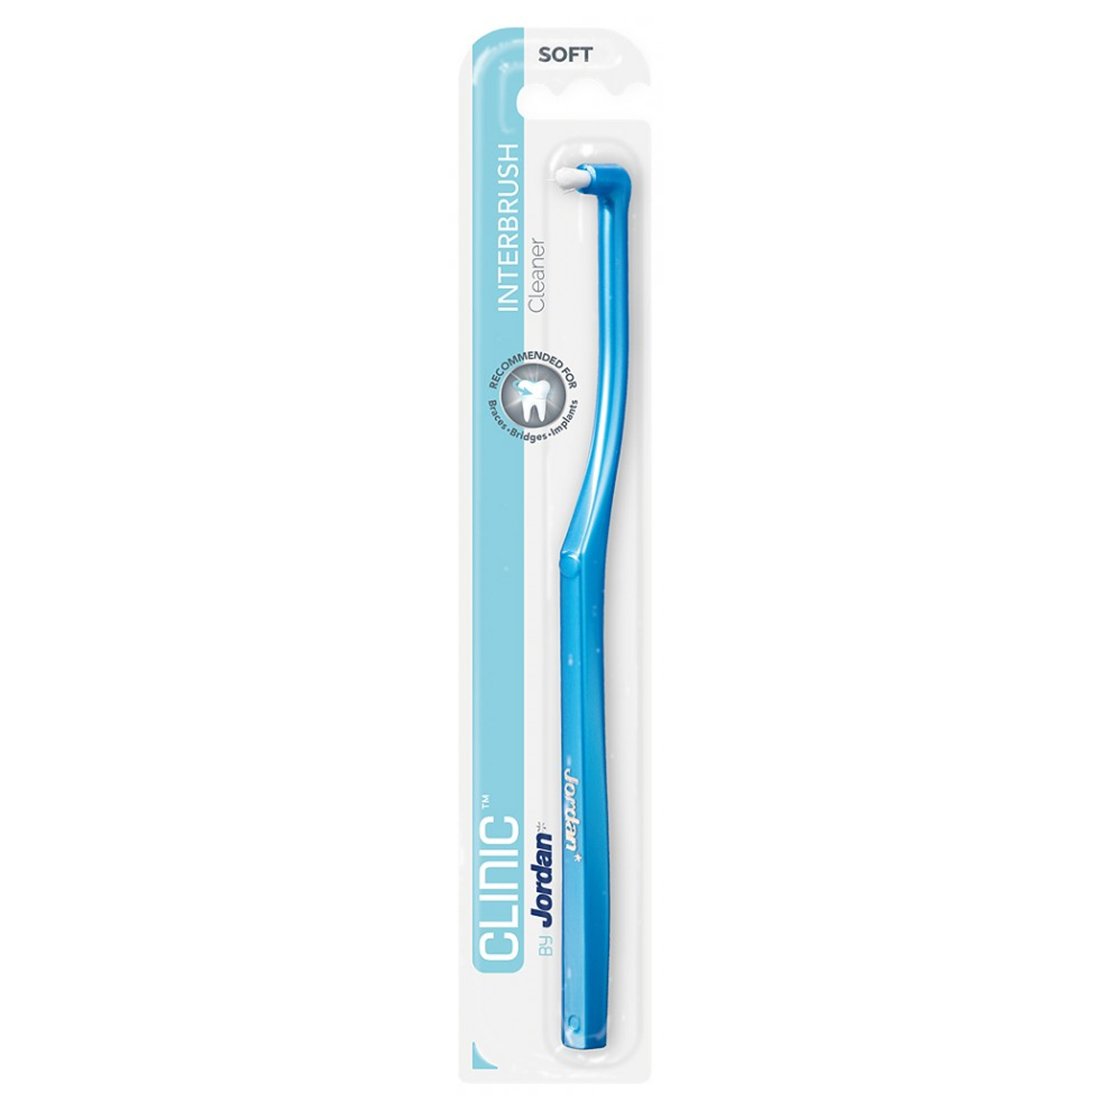 Jordan Clinic Interbrush Cleaner Soft Μαλακή Μονοθύσανη Οδοντόβουρτσα για Αποτελεσματικό Καθαρισμό Ορθοδοντικών Μηχανισμών & Εμφυτευμάτων 1 Τεμάχιο – Μπλε 